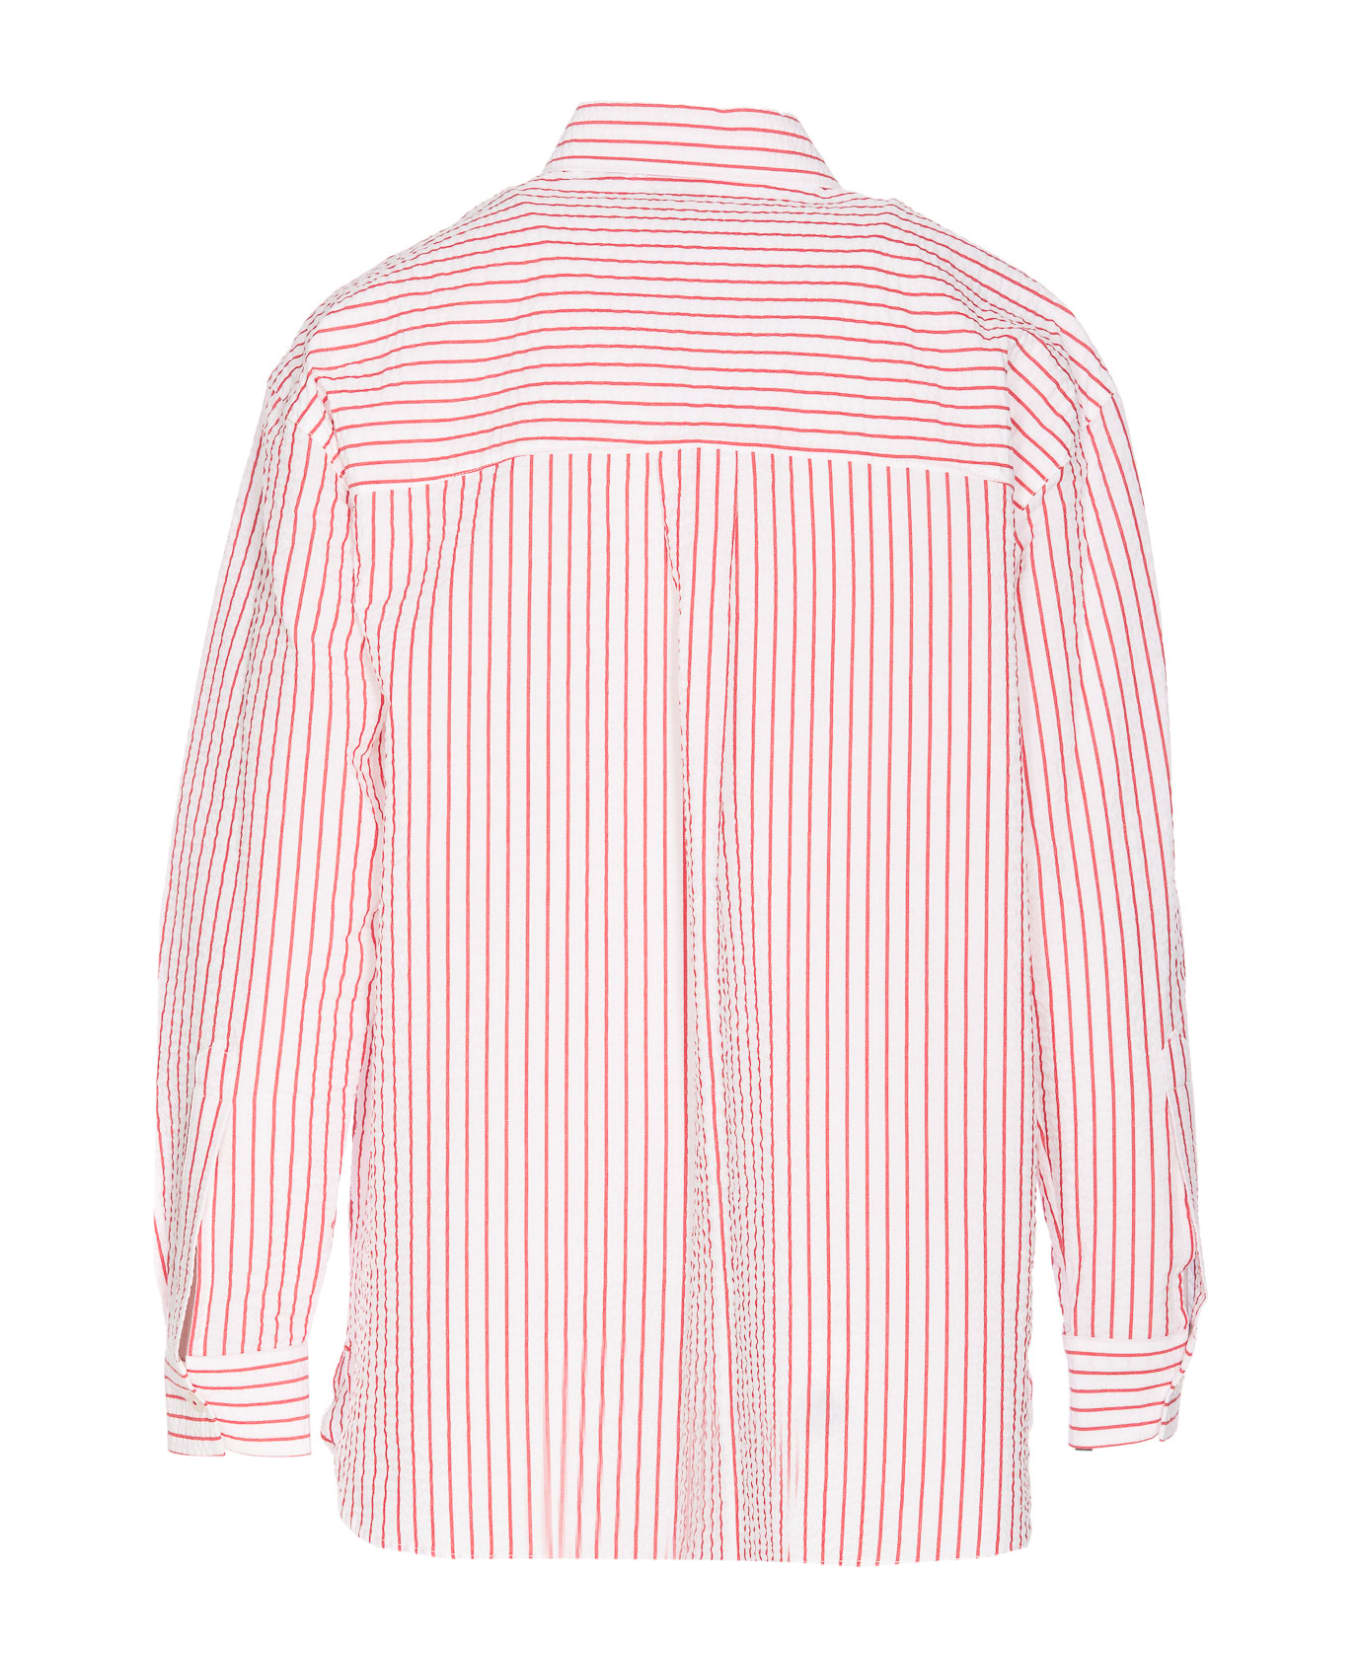 Pinko Seersucker Striped Shirt - Red